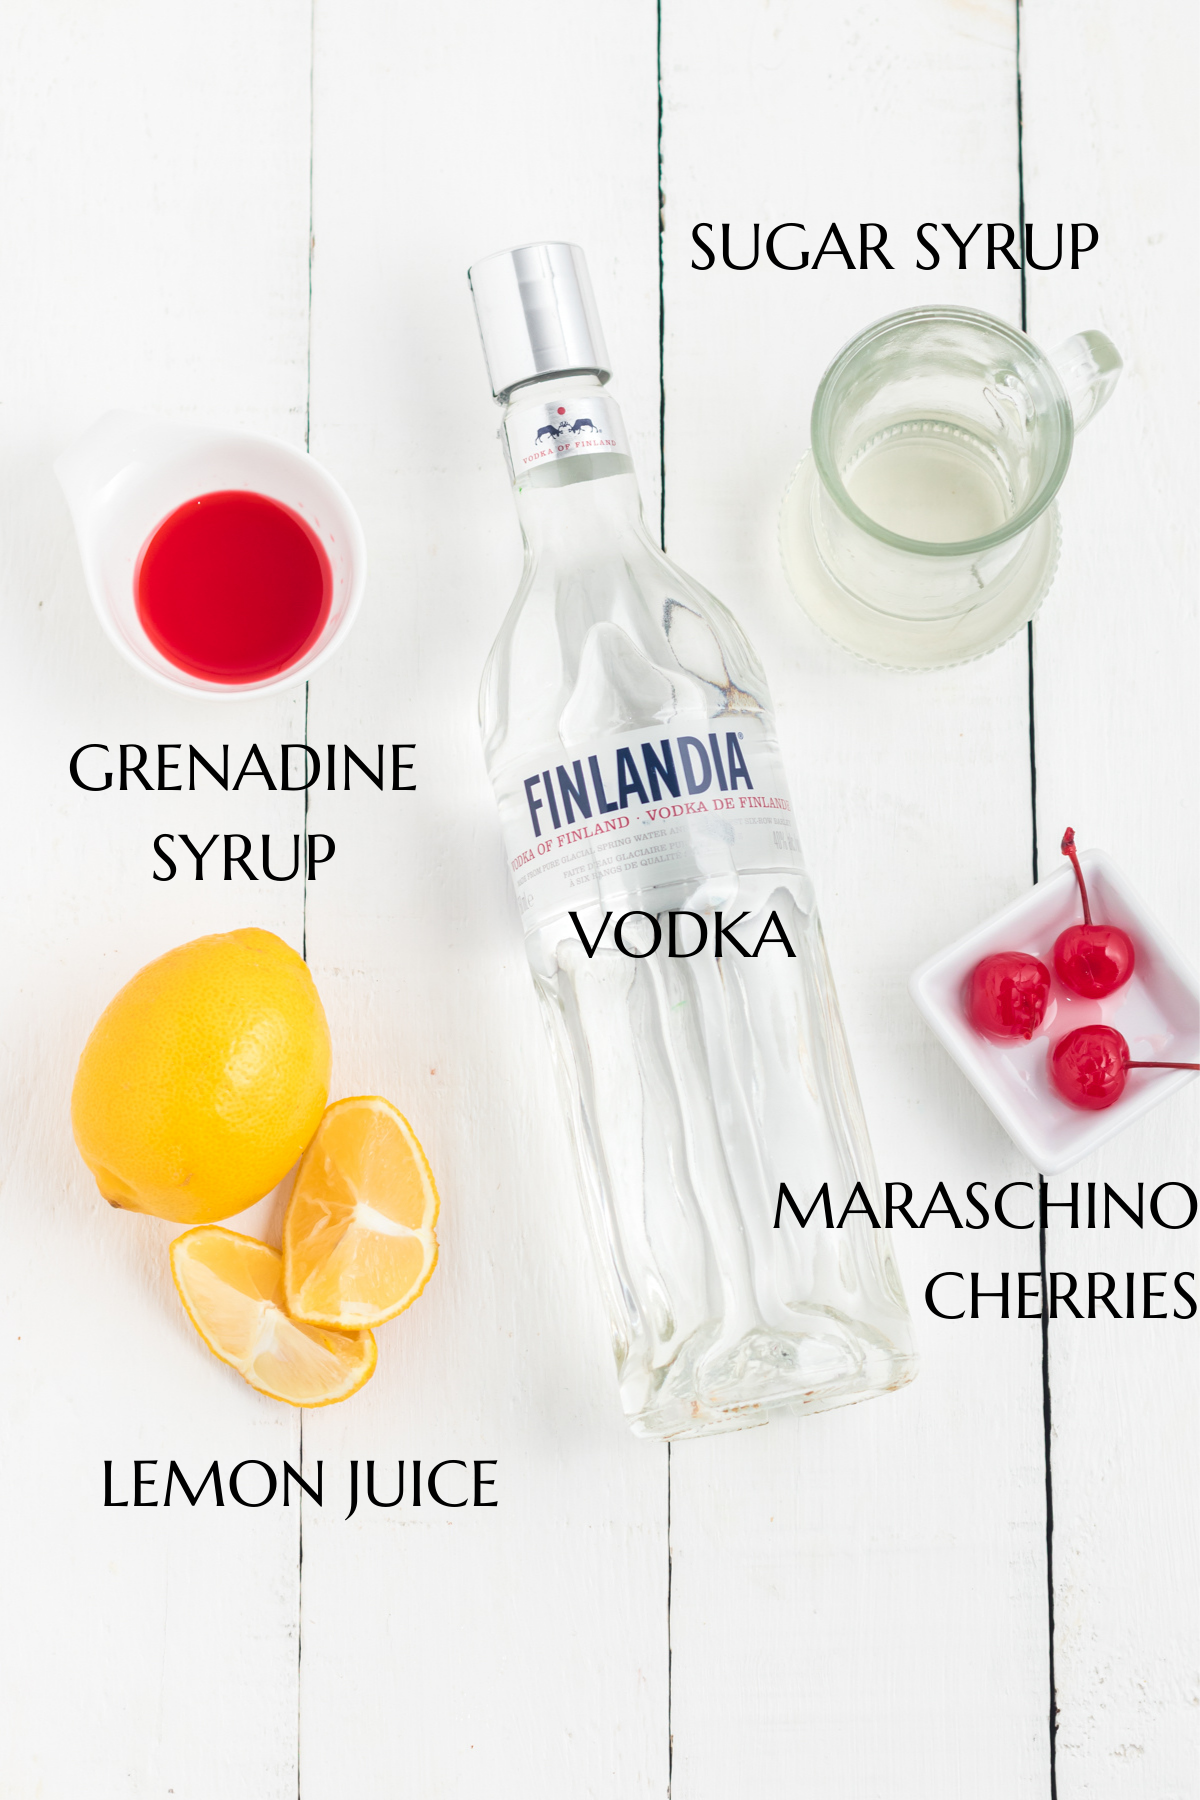 Vodka, grenadine, lemons, sugar syrup and cherries on white table.